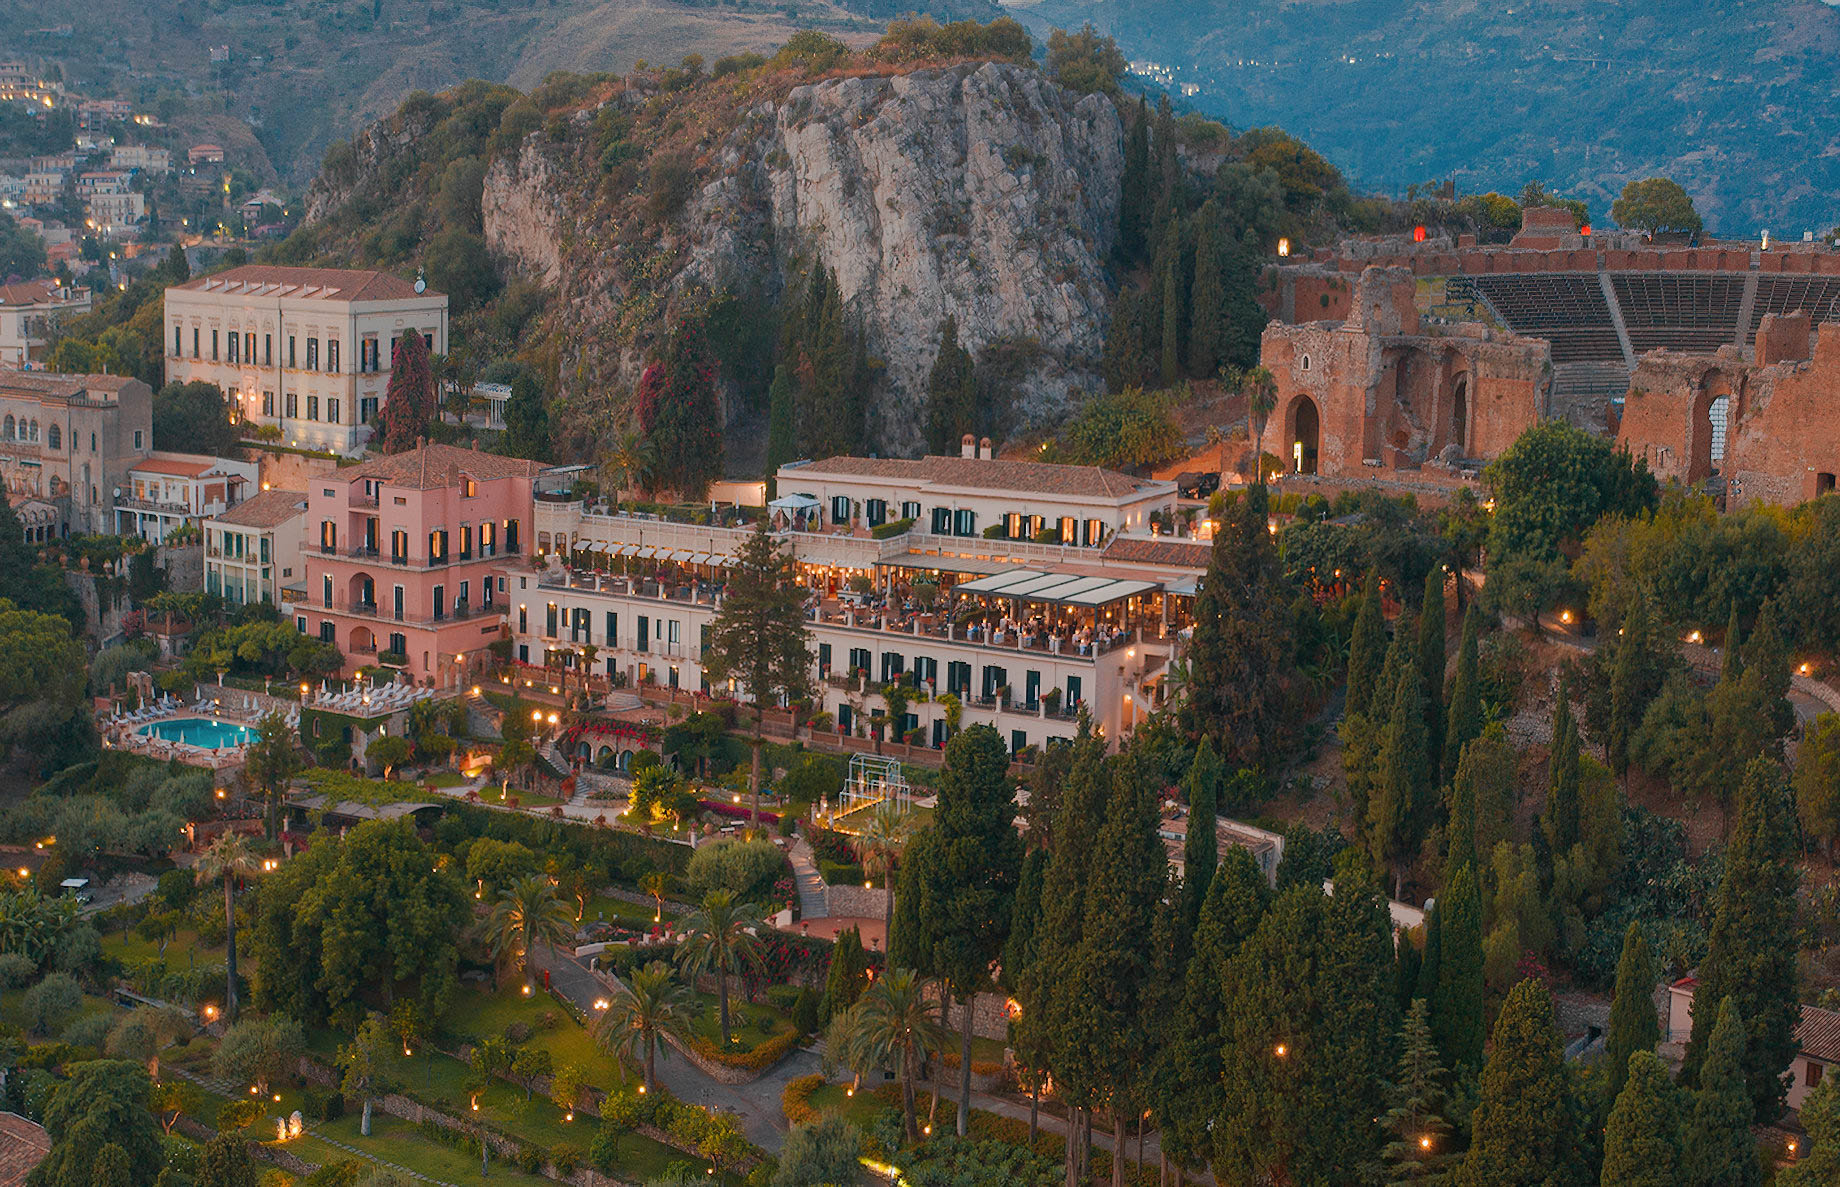 191 – Grand Hotel Timeo, A Belmond Hotel – Taormina, Italy